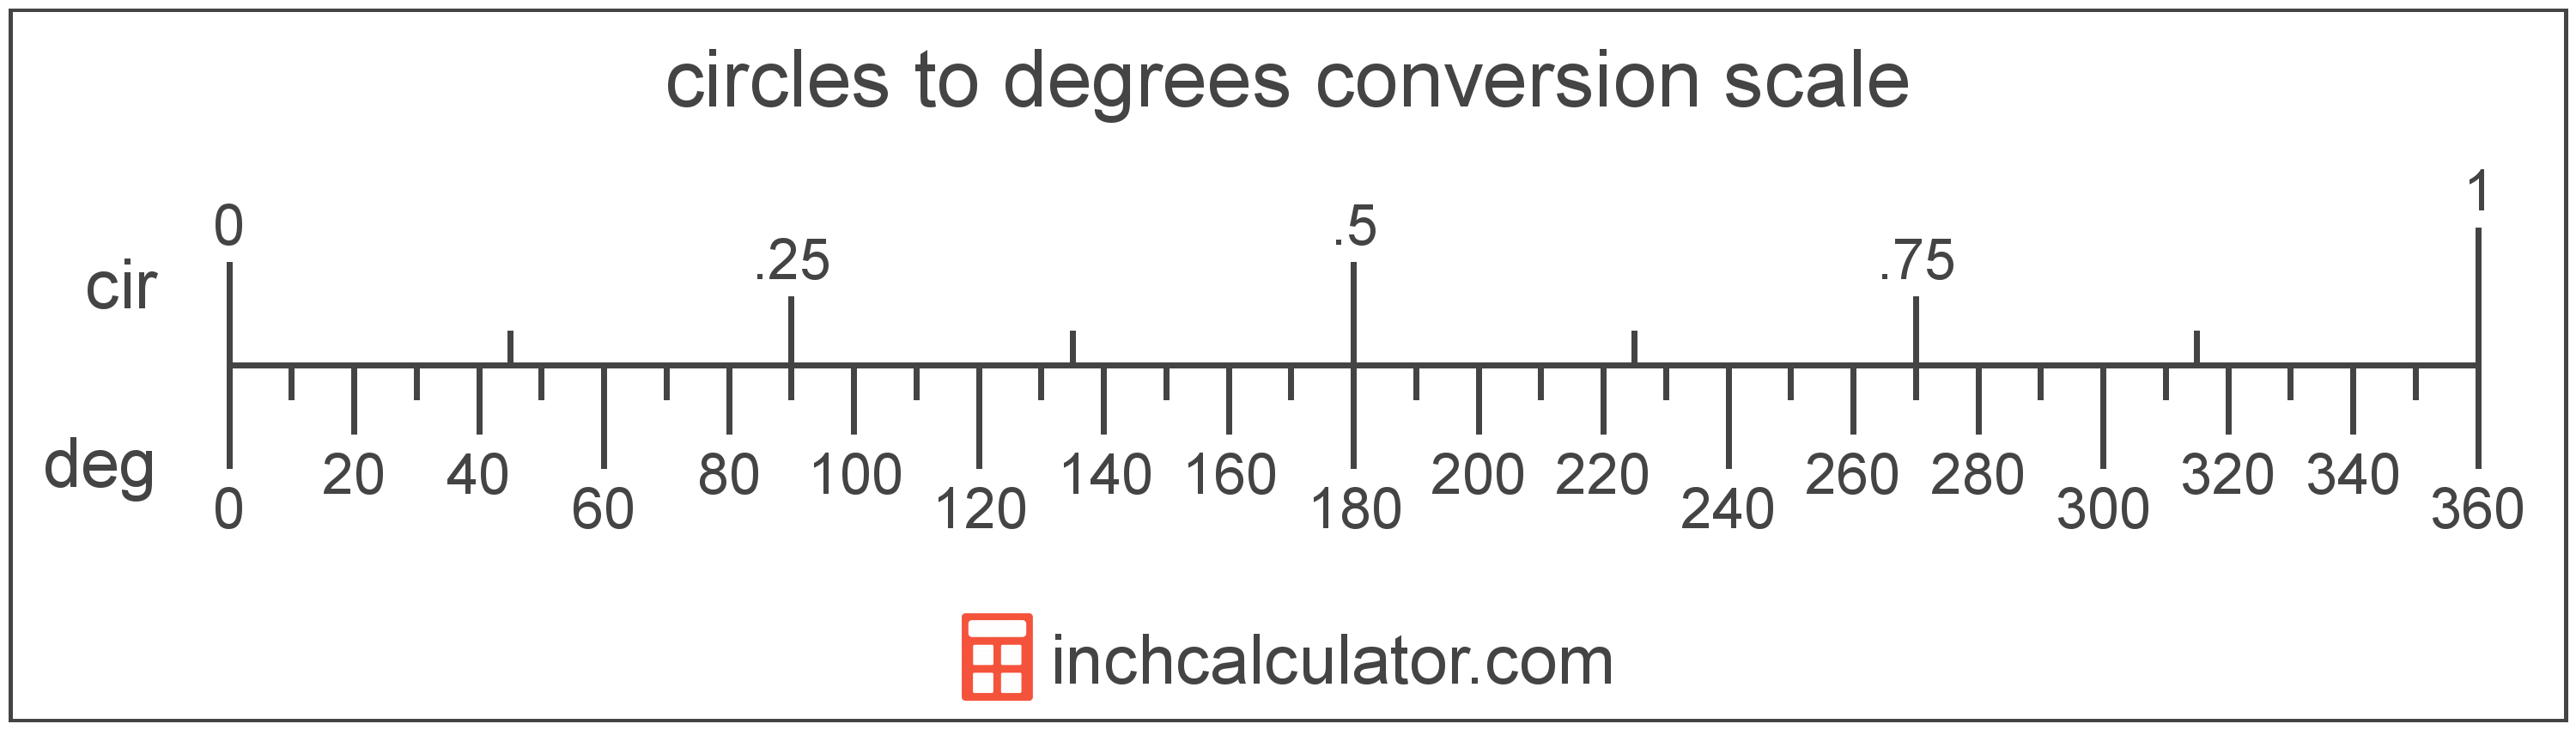 Circles to Degrees Conversion (cir to °) - Inch Calculator